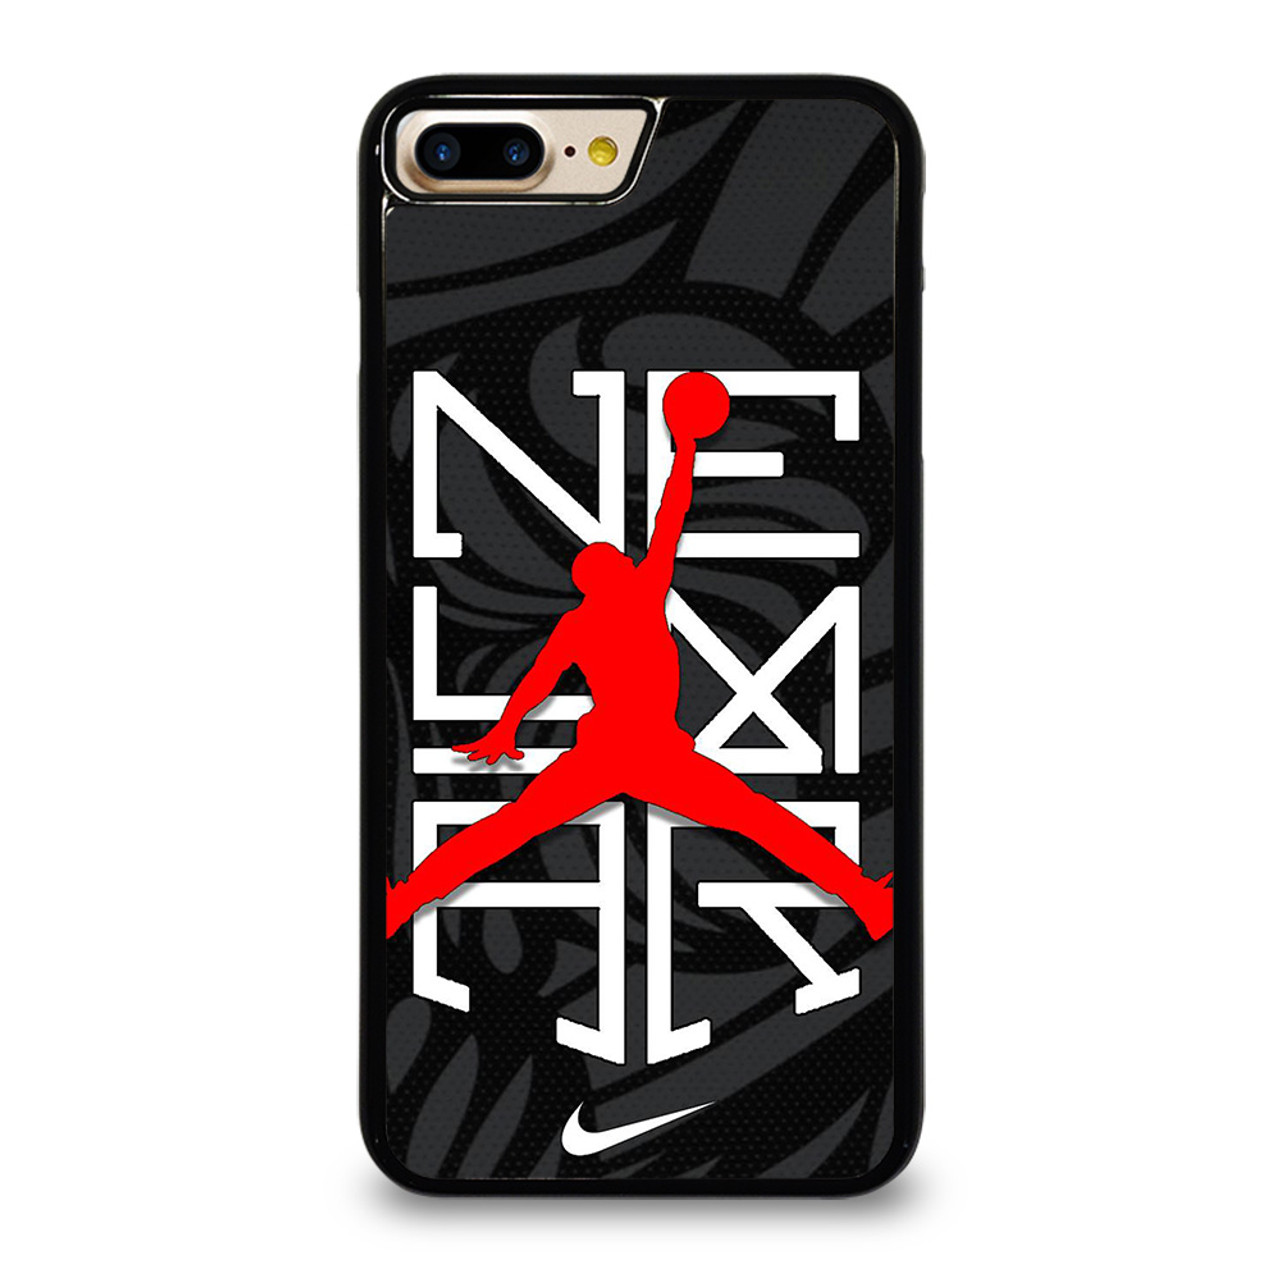 NEYMAR AIR JORDAN NIKE iPhone 7 Plus Case Cover